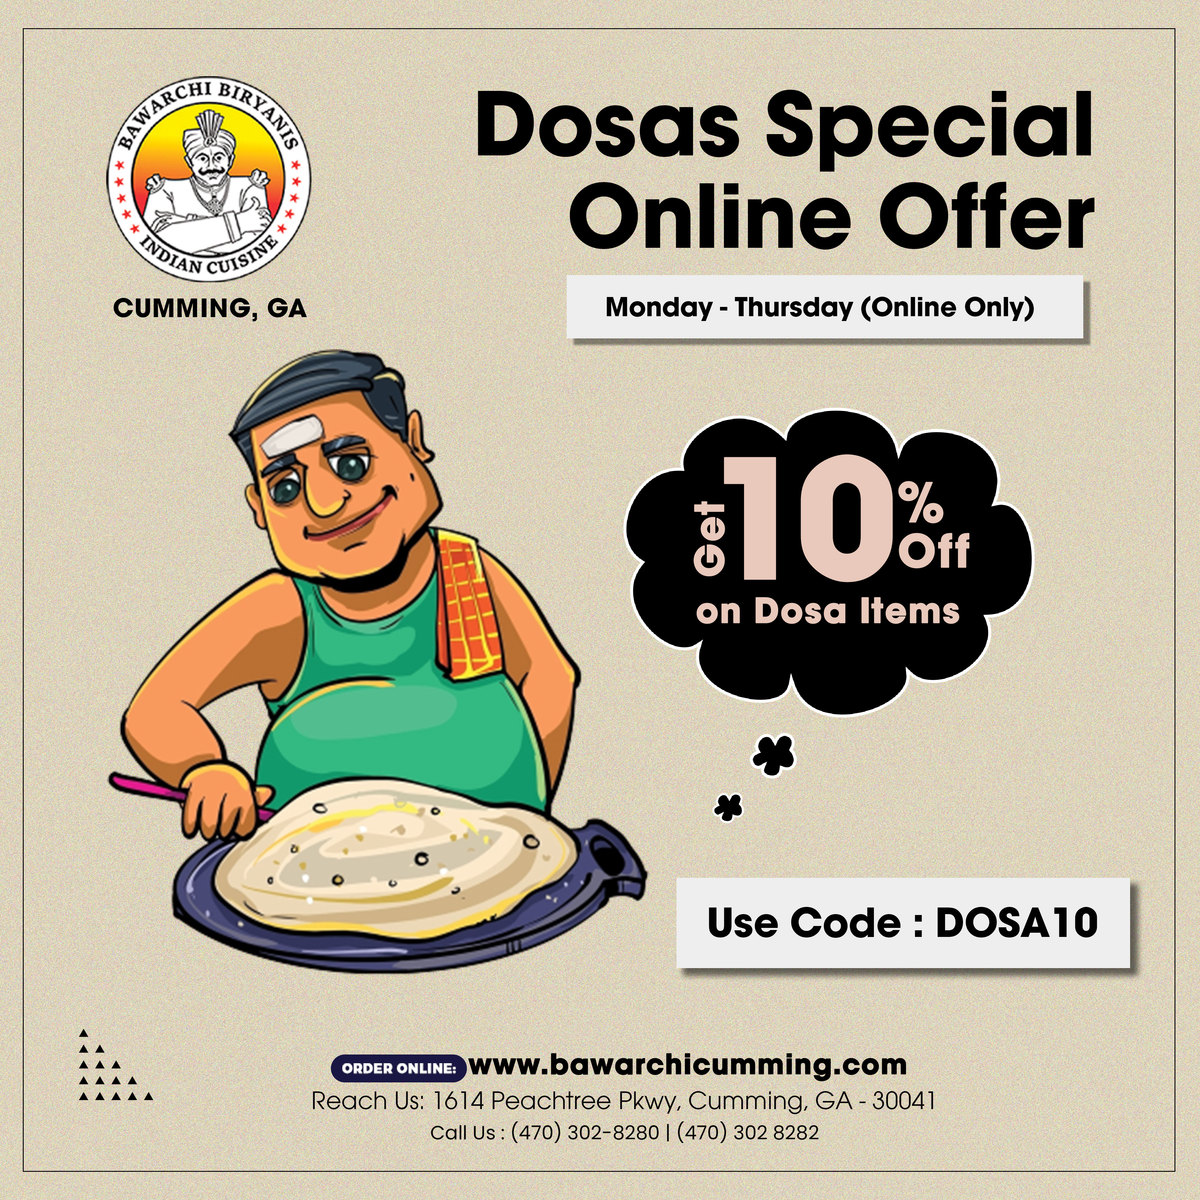 Dosas Special Online Offer